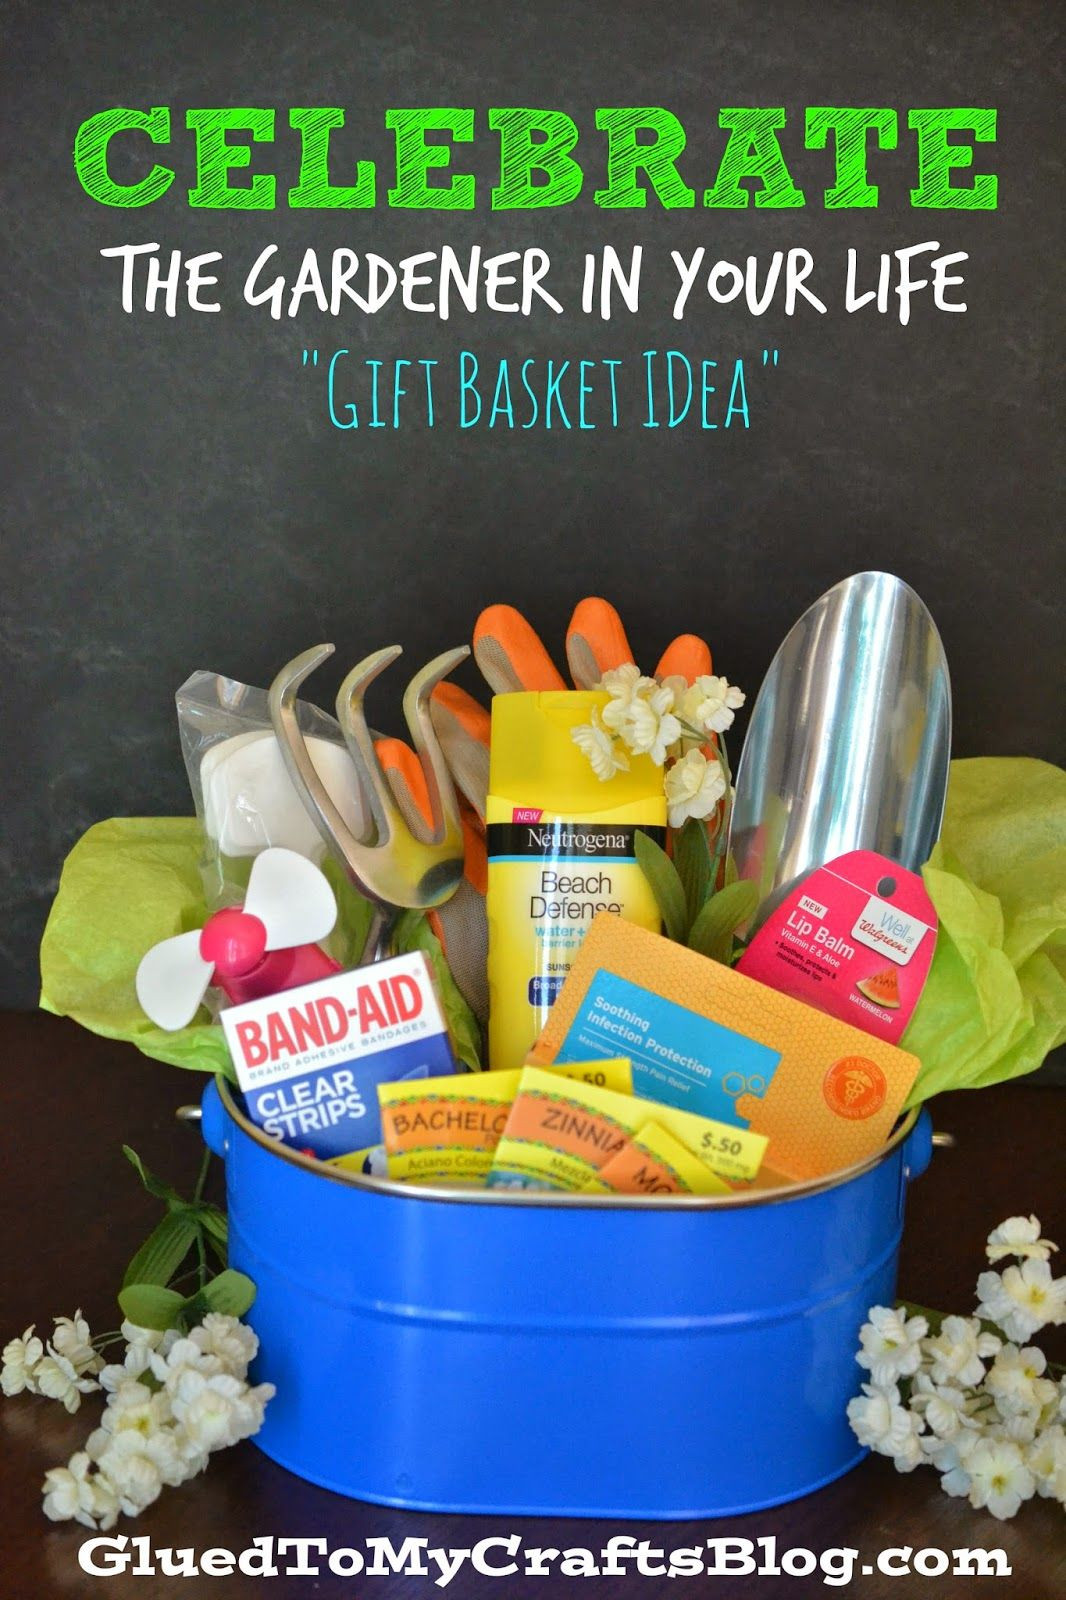 Garden Gift Baskets Ideas
 Celebrate The Gardener In Your Life Gift Basket Idea